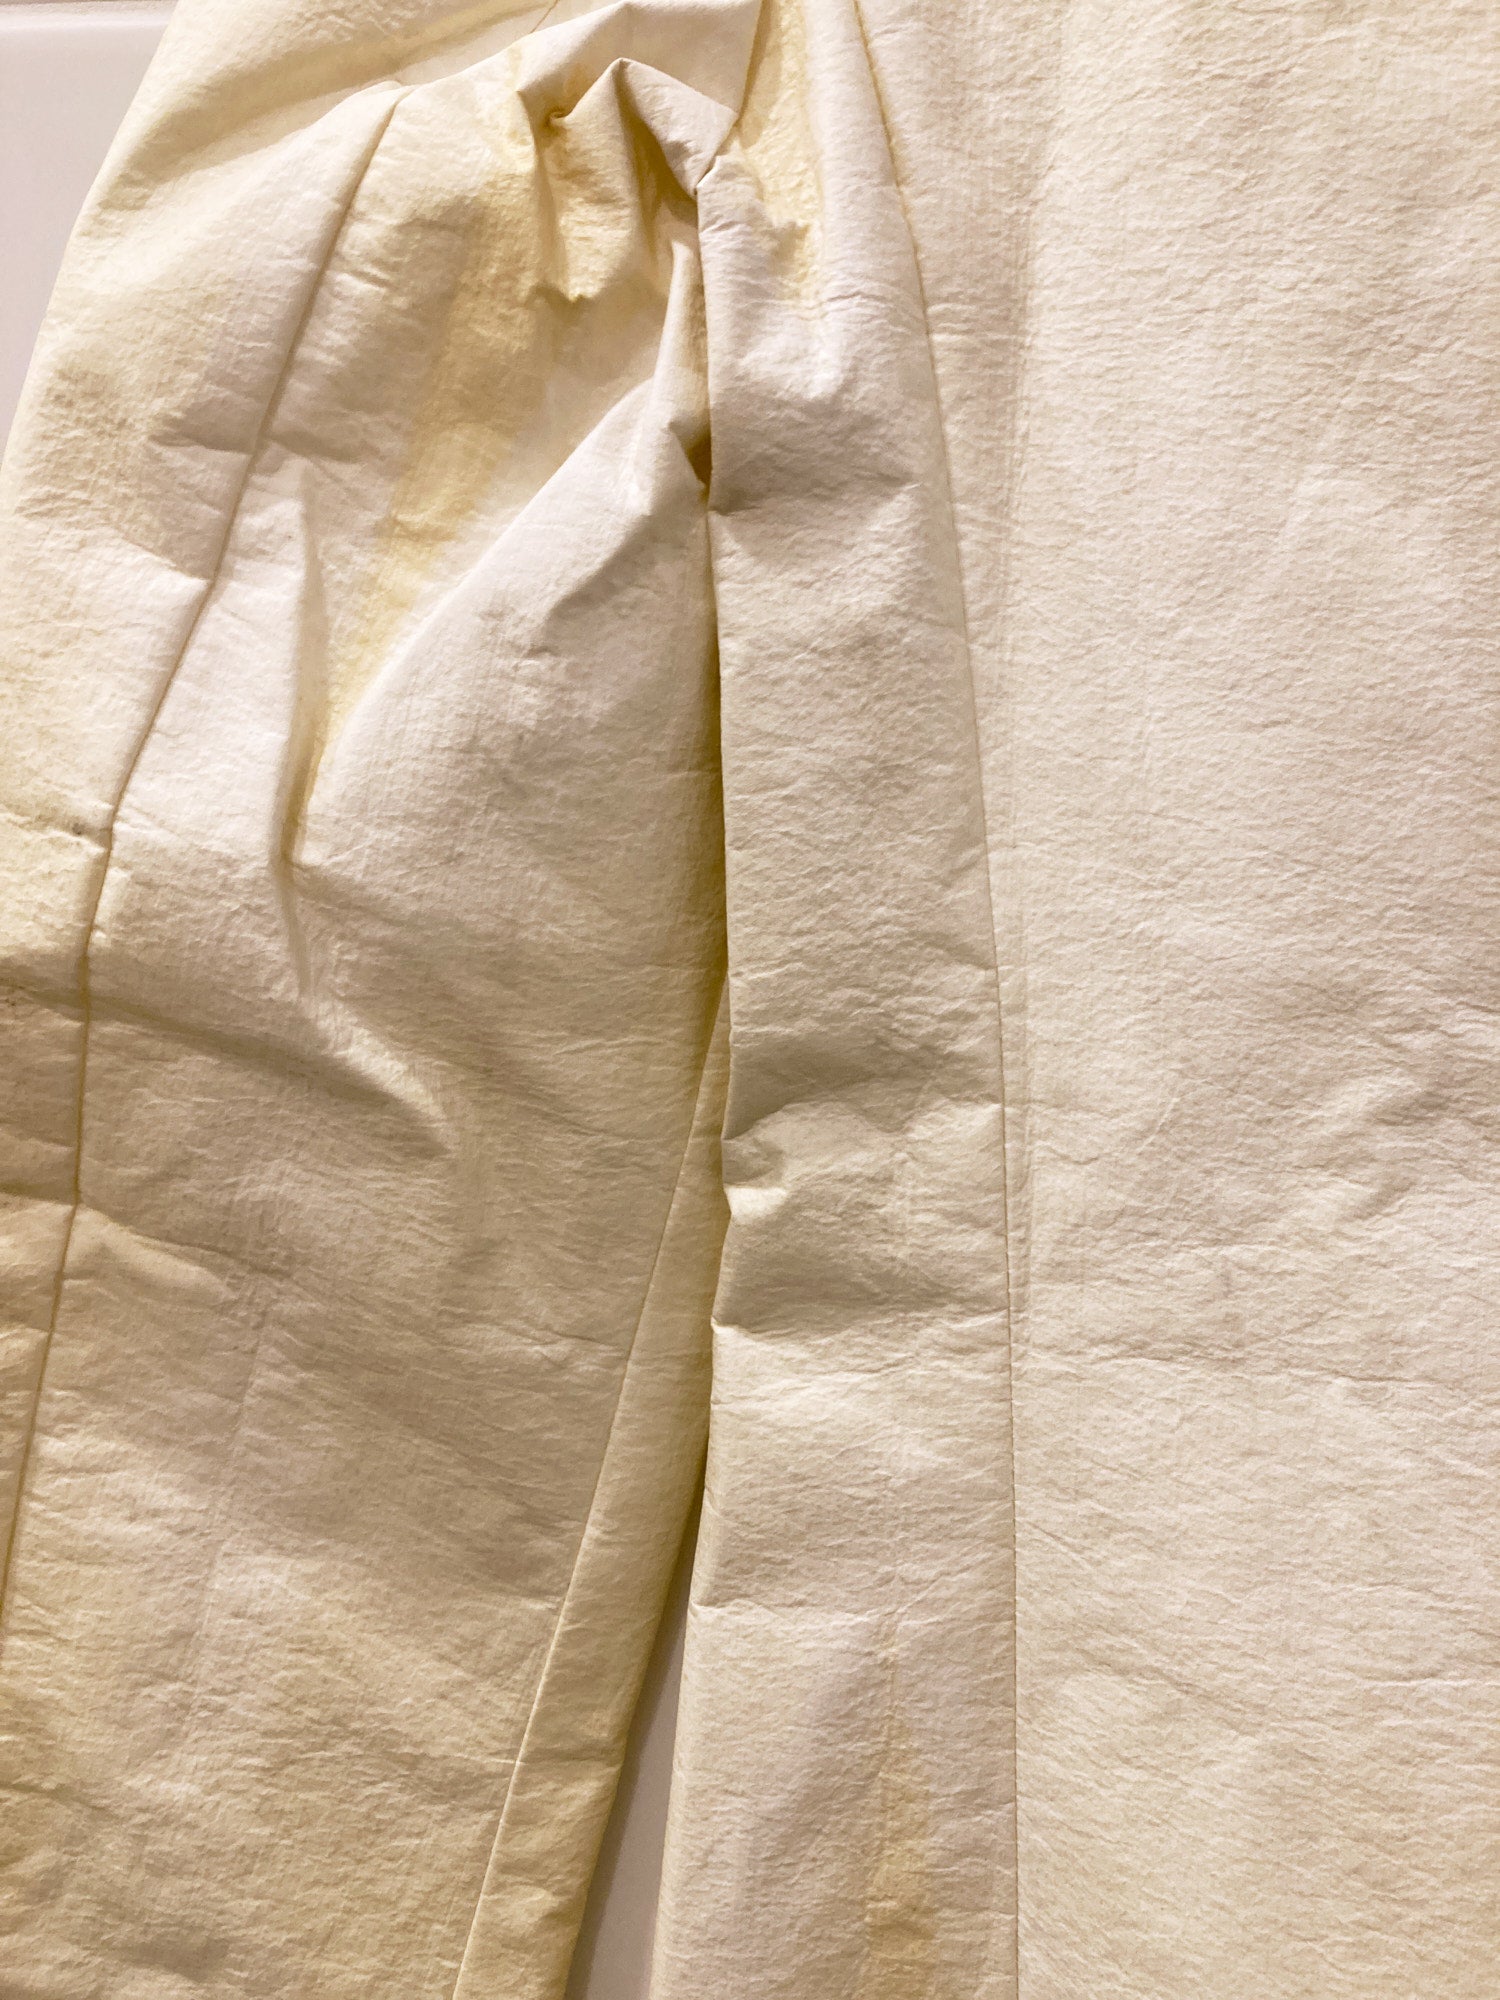 Jean Colonna cream paper-y vinyl covered placket coat - size 38